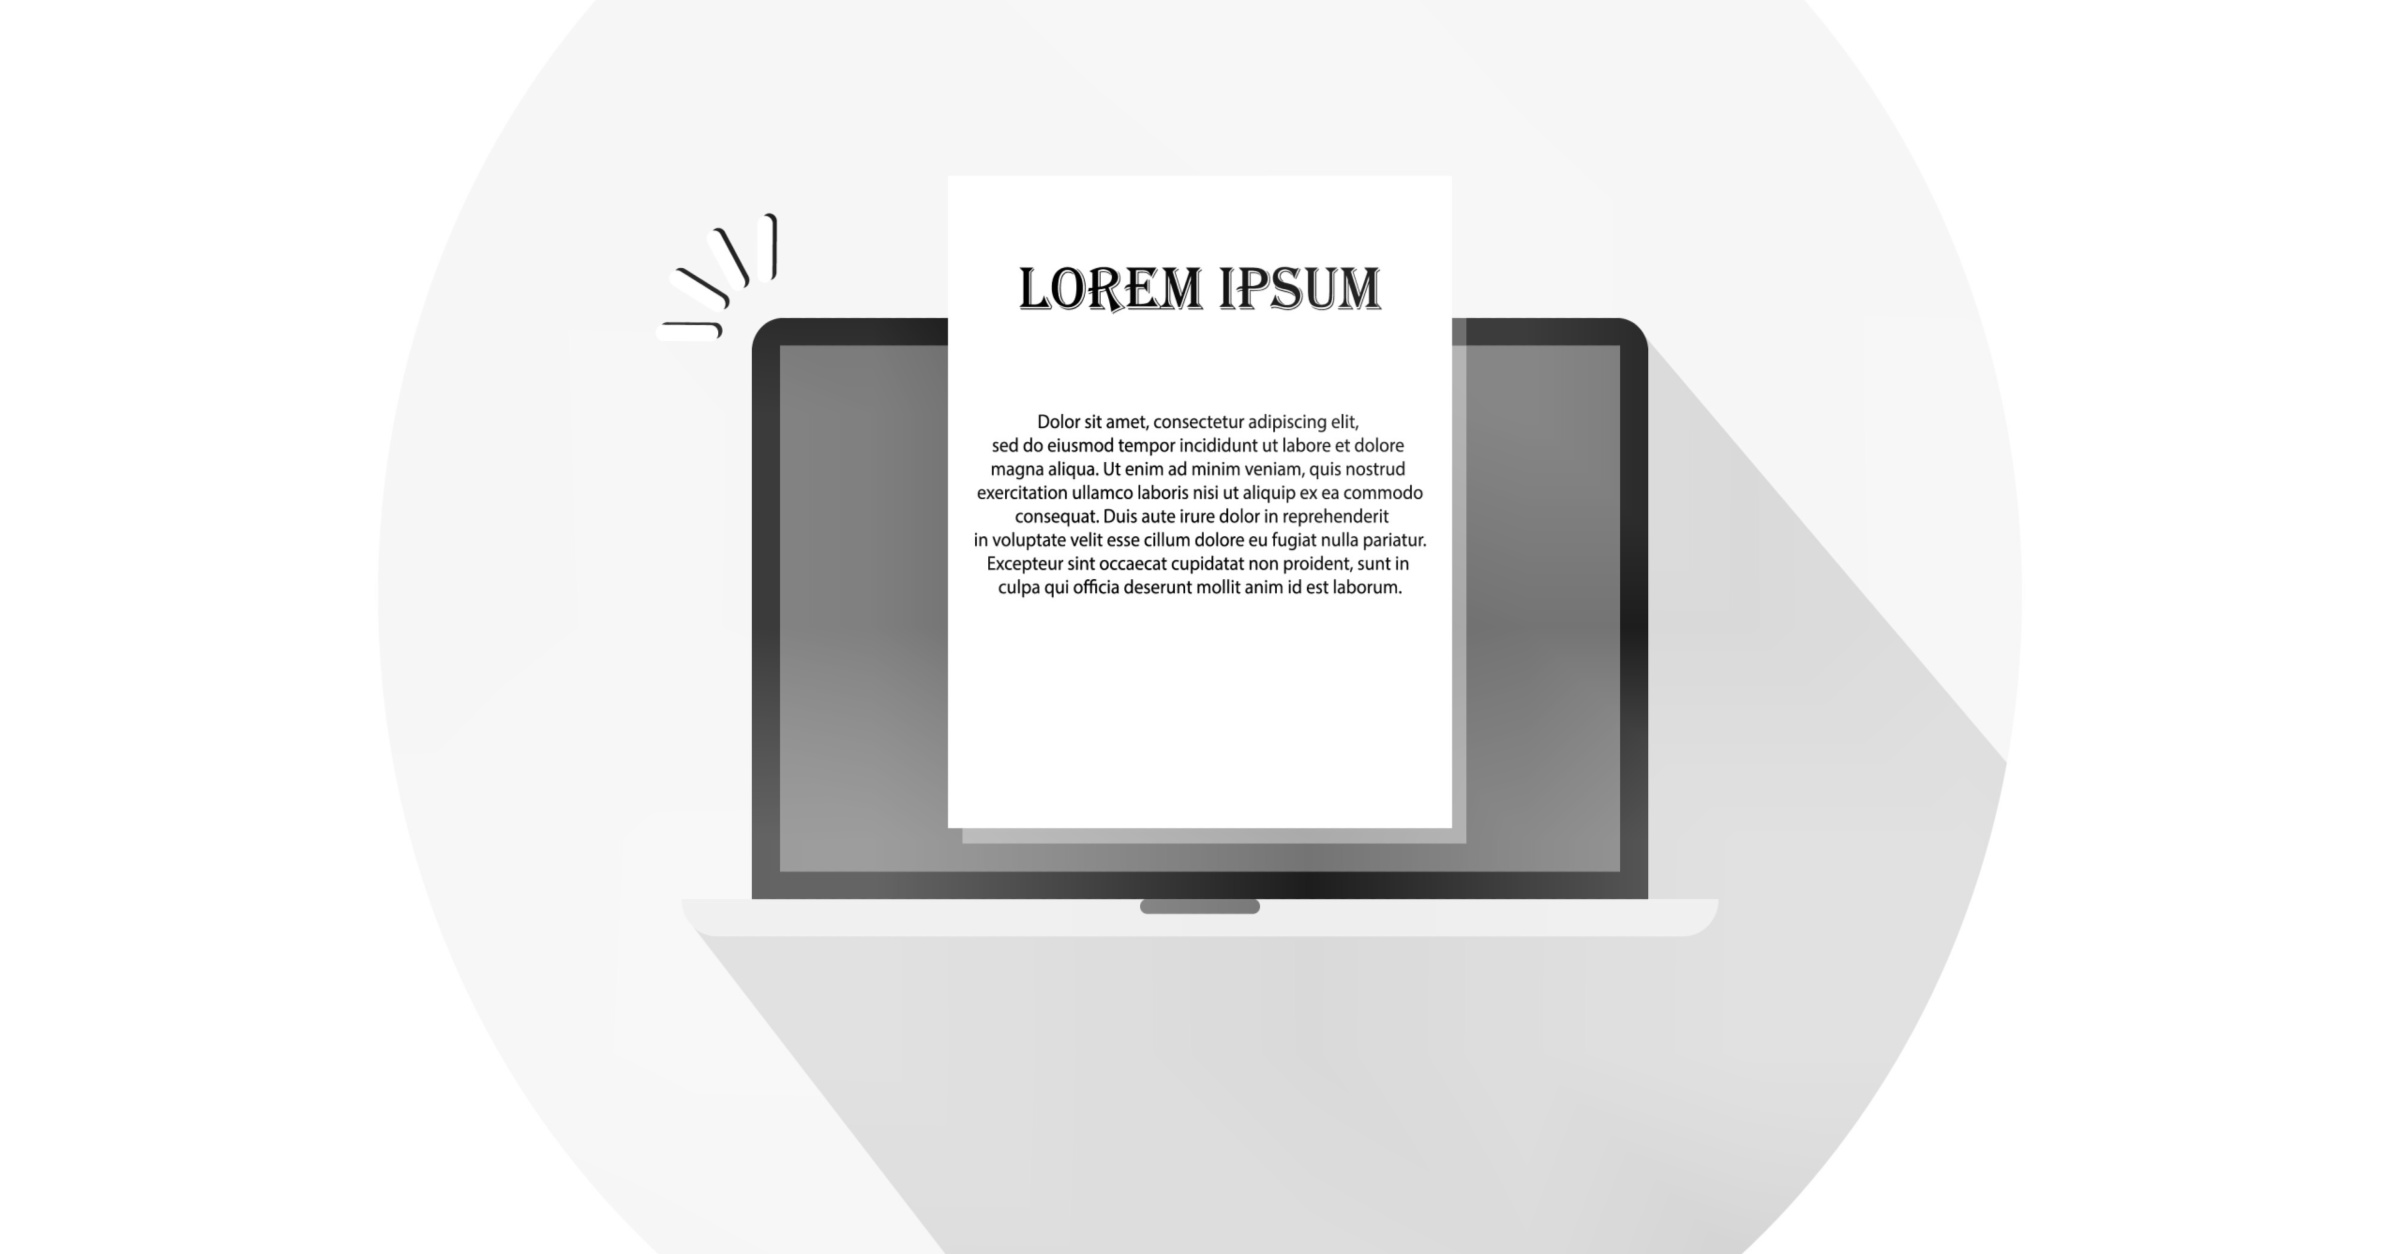 6 alternatives to lorem ipsum￼